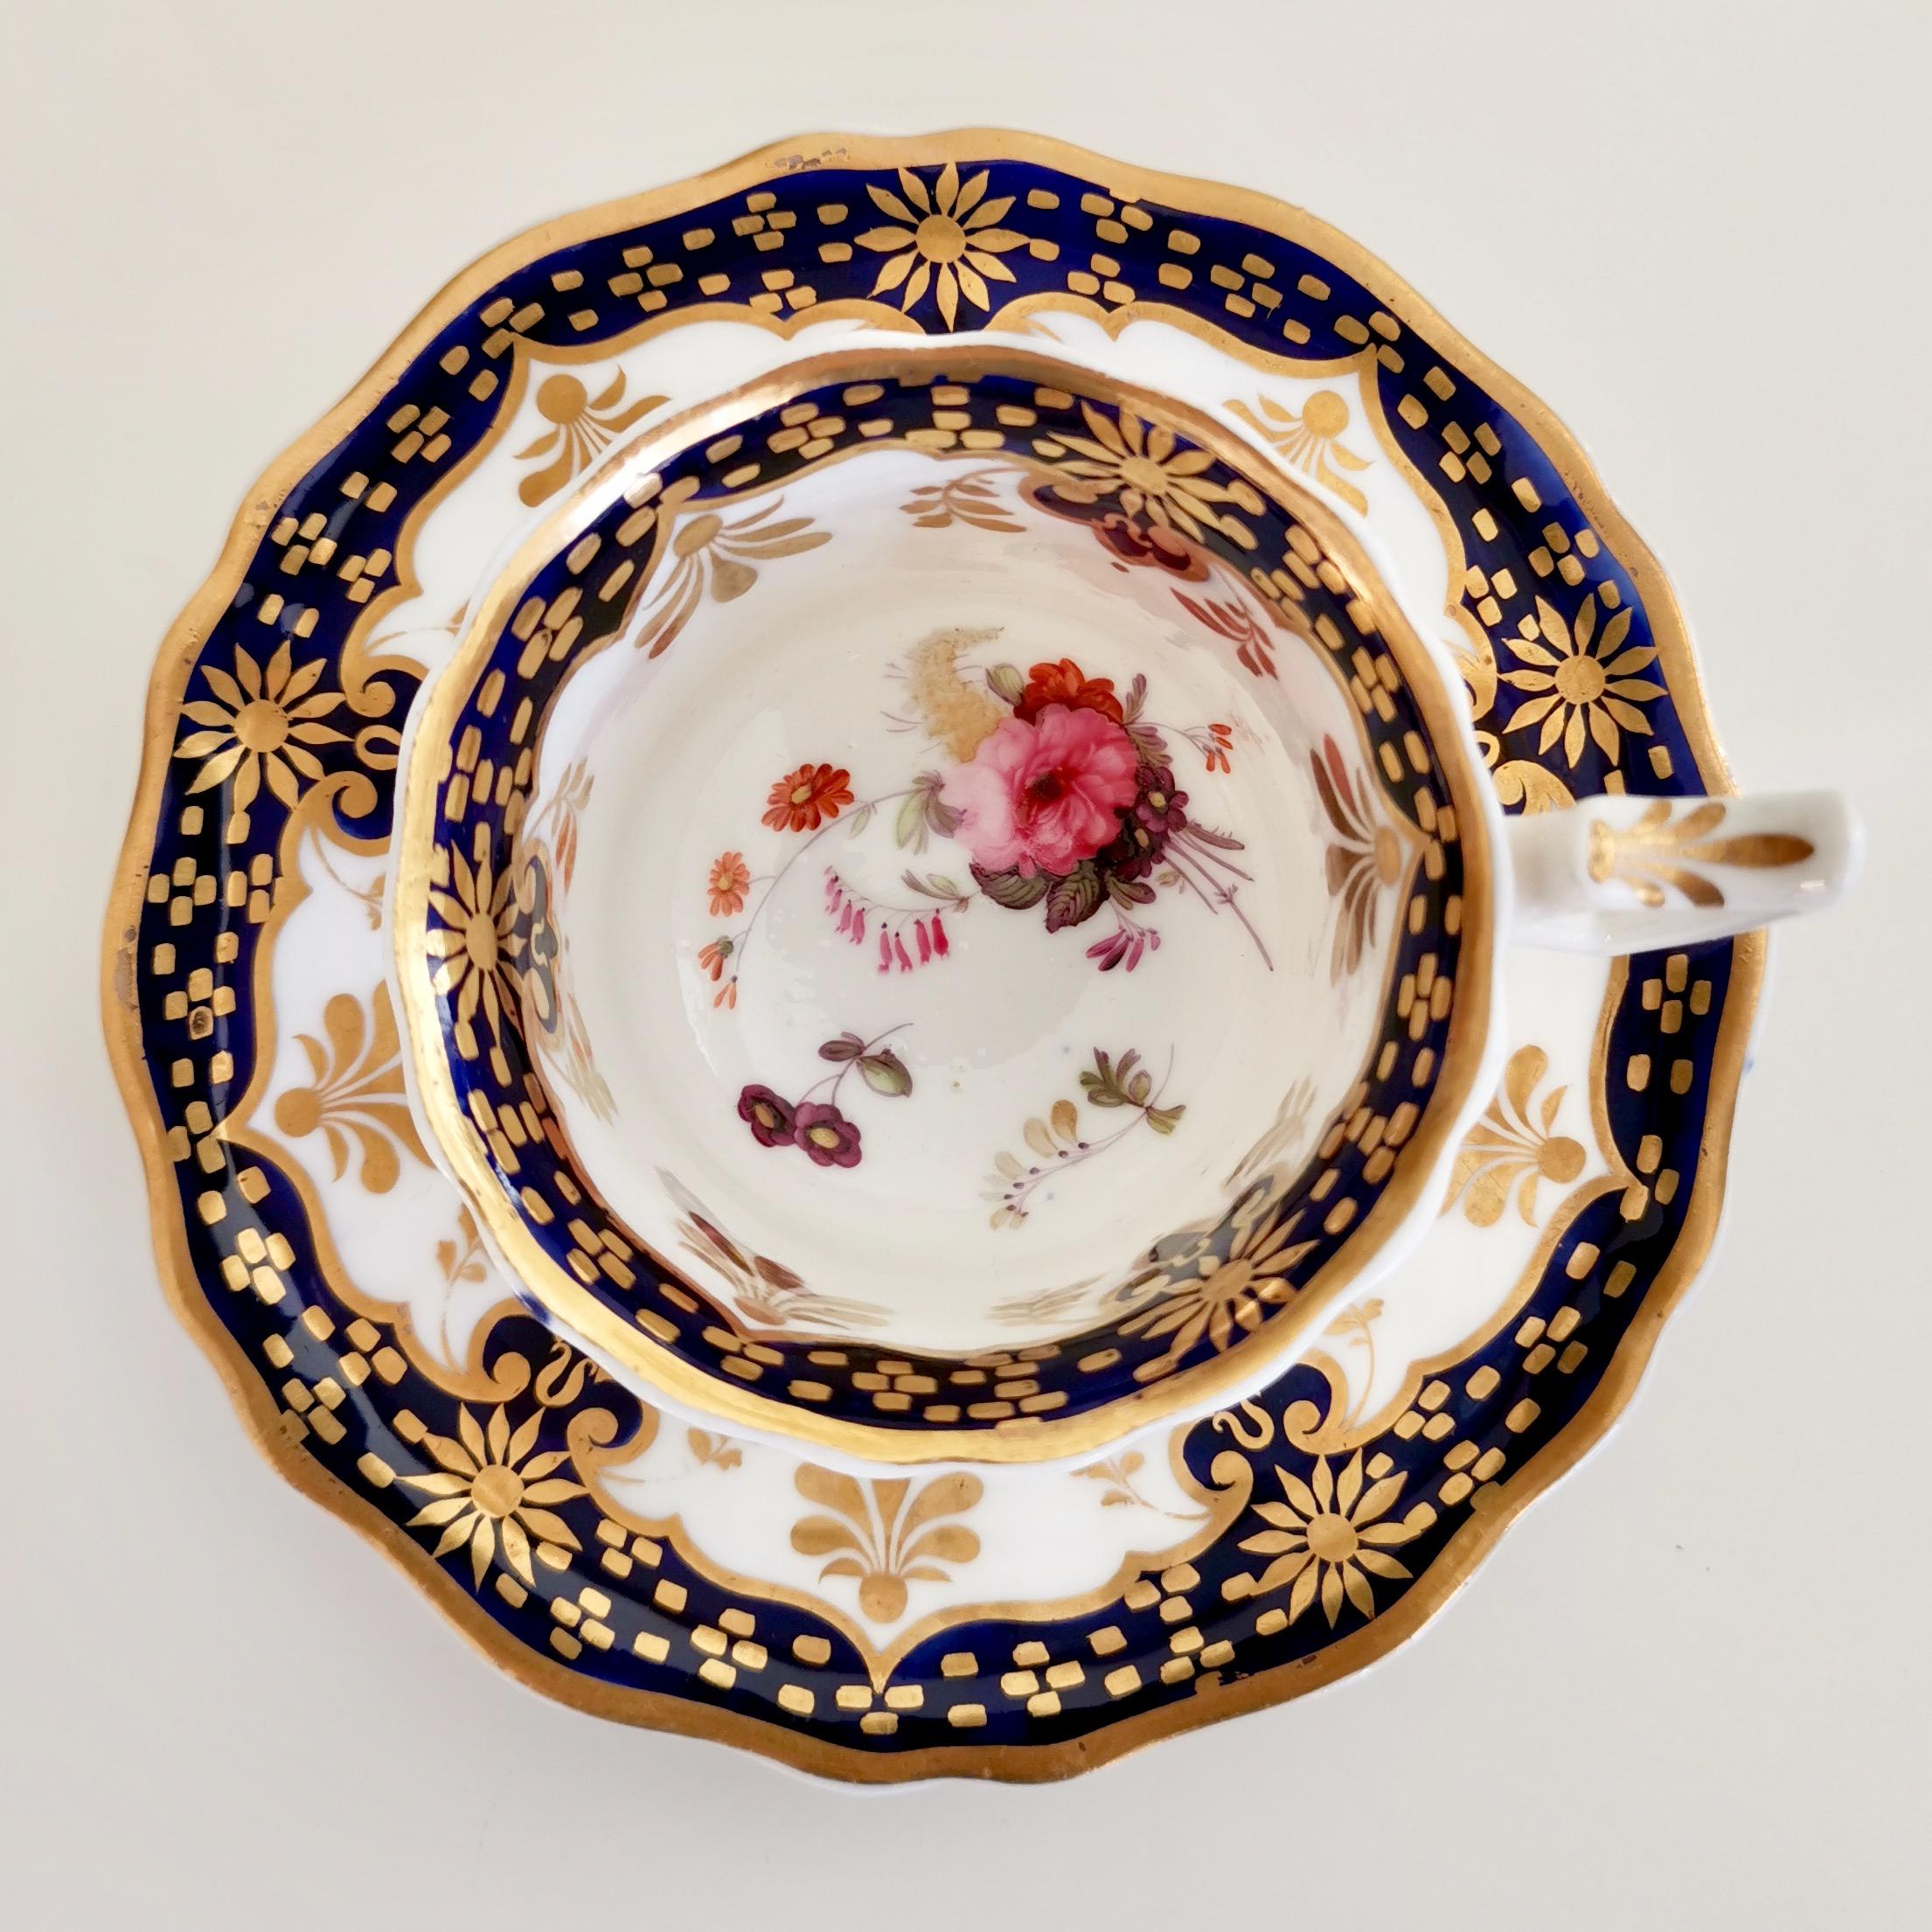 Early 19th Century Ridgway Porcelain Teacup Trio, Cobalt Blue, Gilt and Flowers, Regency circa 1825